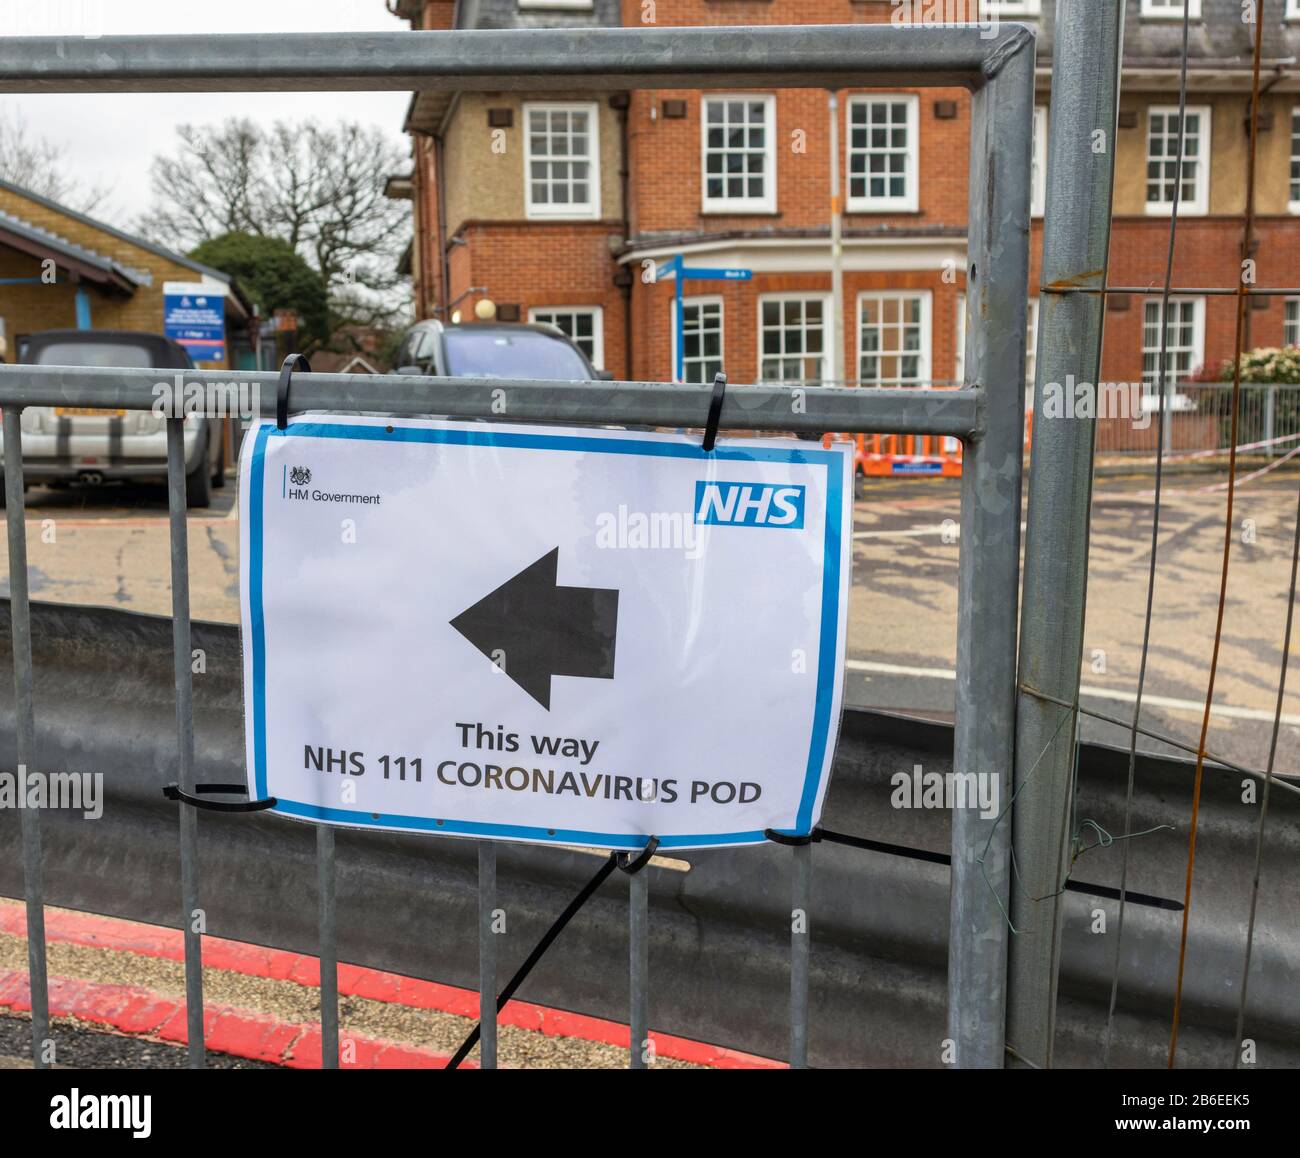 Sign pointing to a Coronavirus Pod at Southampton General Hospital, a teaching hospital run by University Hospital Southampton NHS Foundation Trust Stock Photo